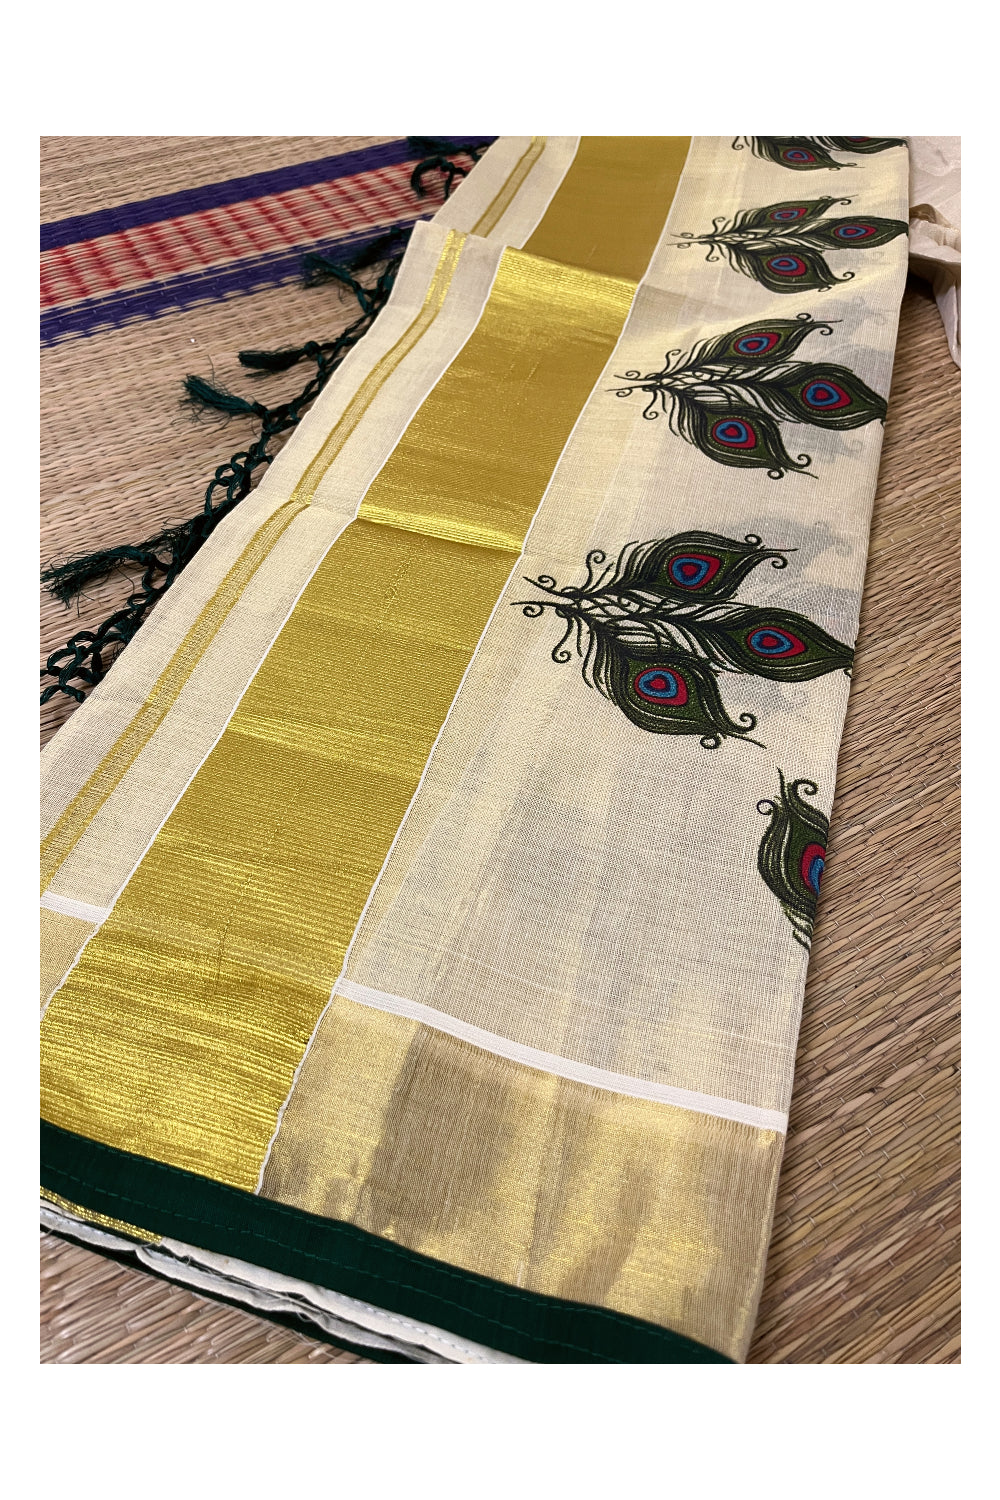 Semi Stitched Dhavani Set with Tissue Block Print Design Pavada and Dark Green Bead Work Blouse Piece